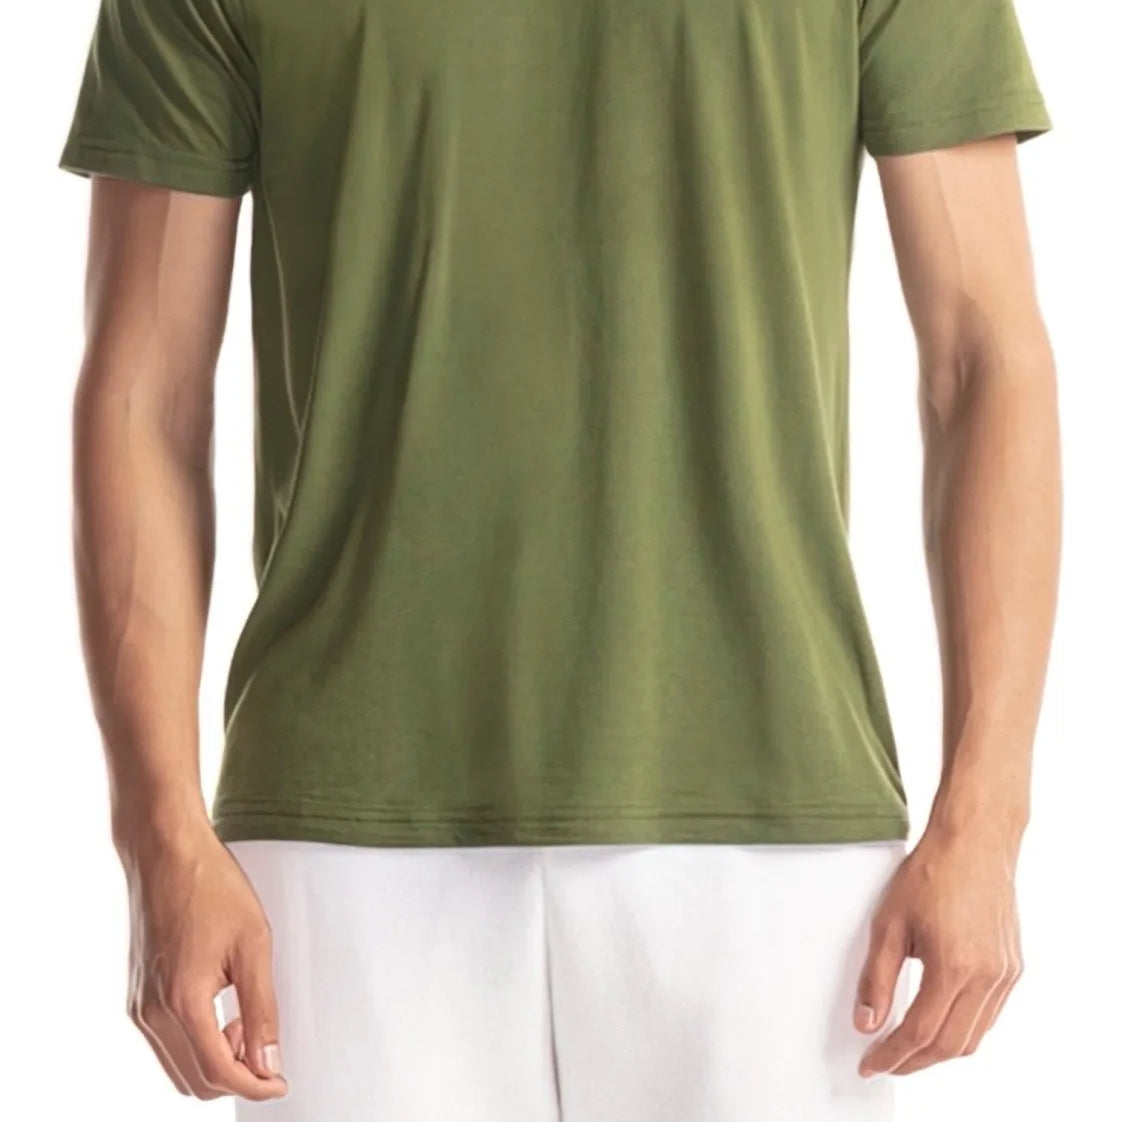 Bamboo T-Shirt - Style 55 - Print Me Shirts